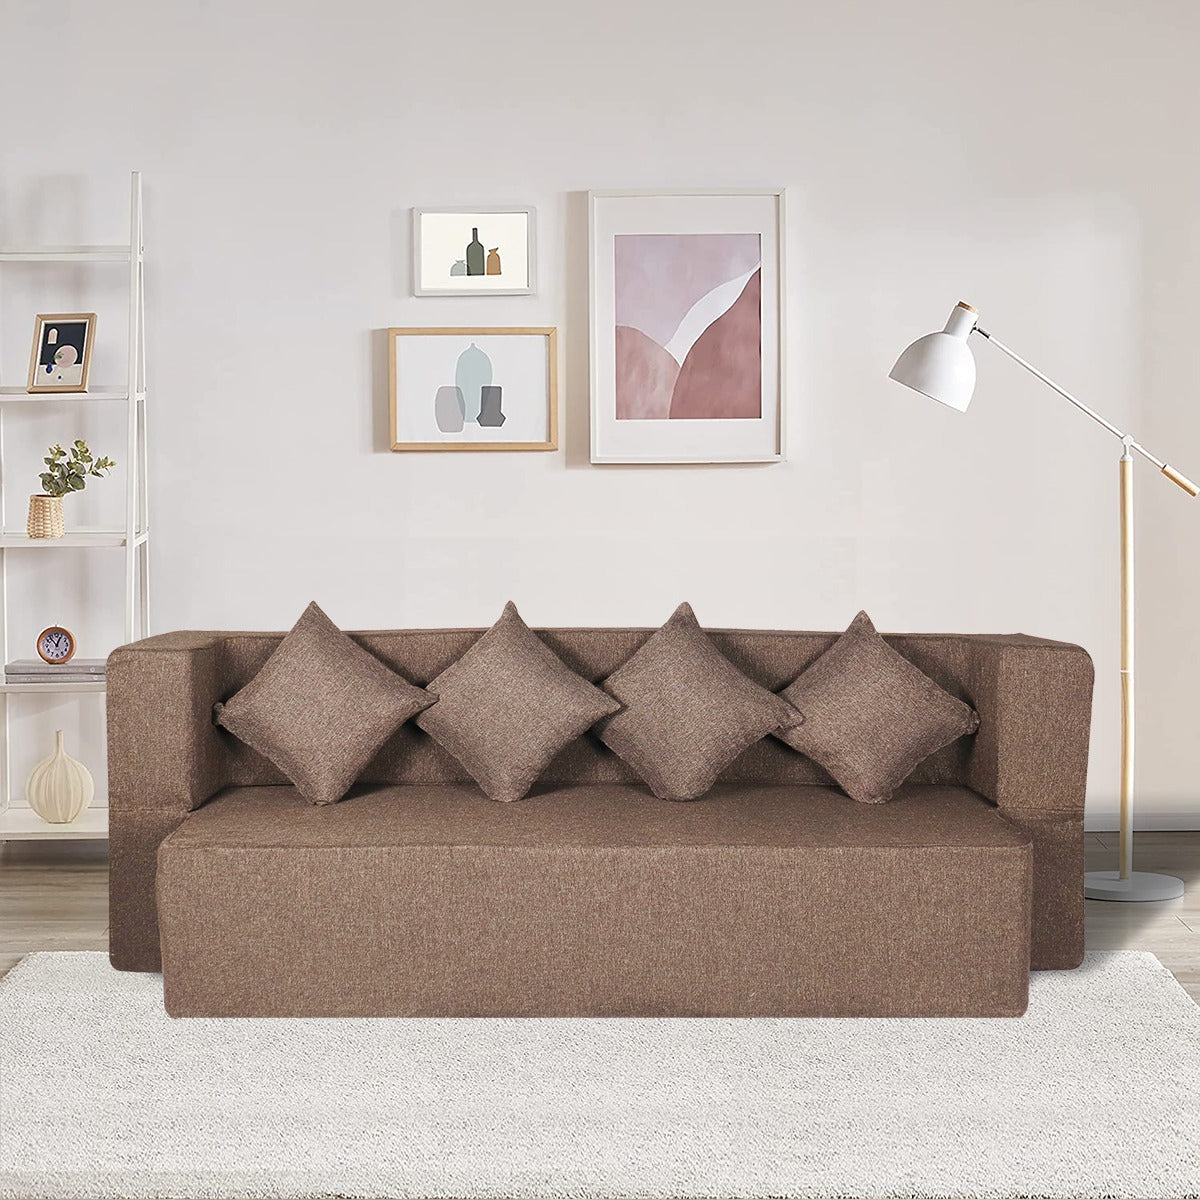 Brown Jute Fabric (78"x36"x14") FlipperX Sofa cum Bed with 4 Same Cushions